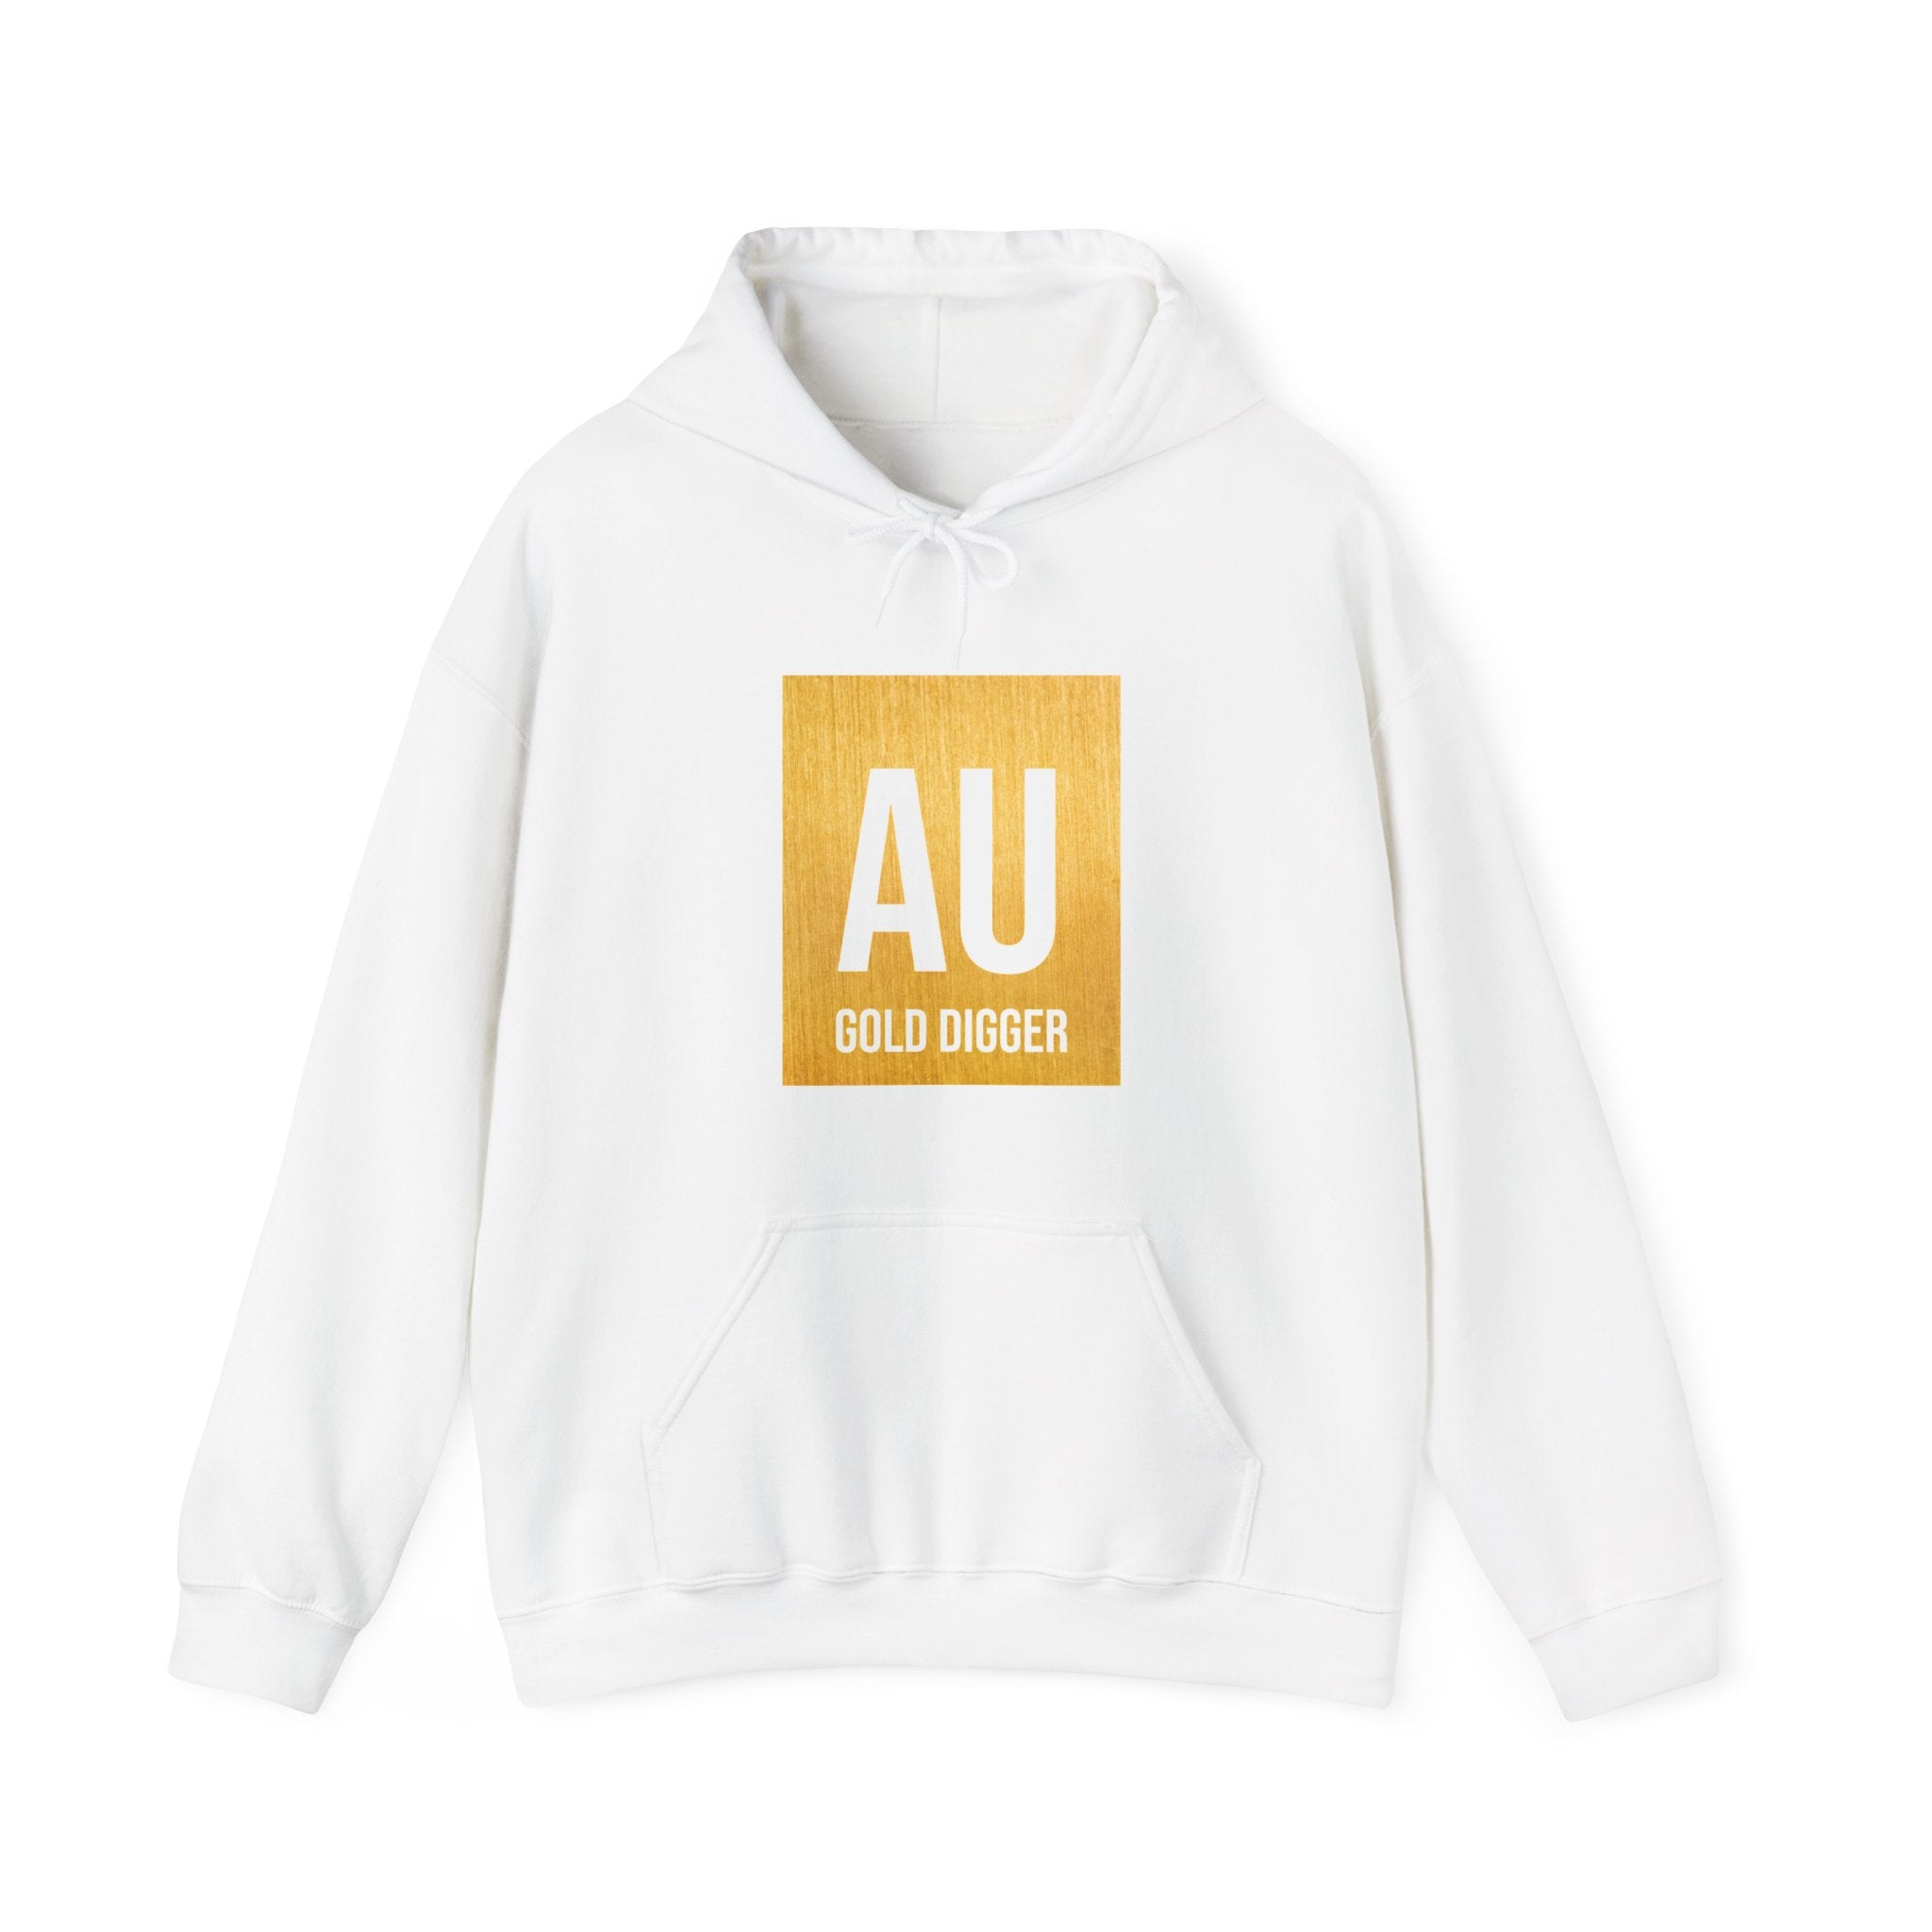 AU Gold Digger - Hooded Sweatshirt